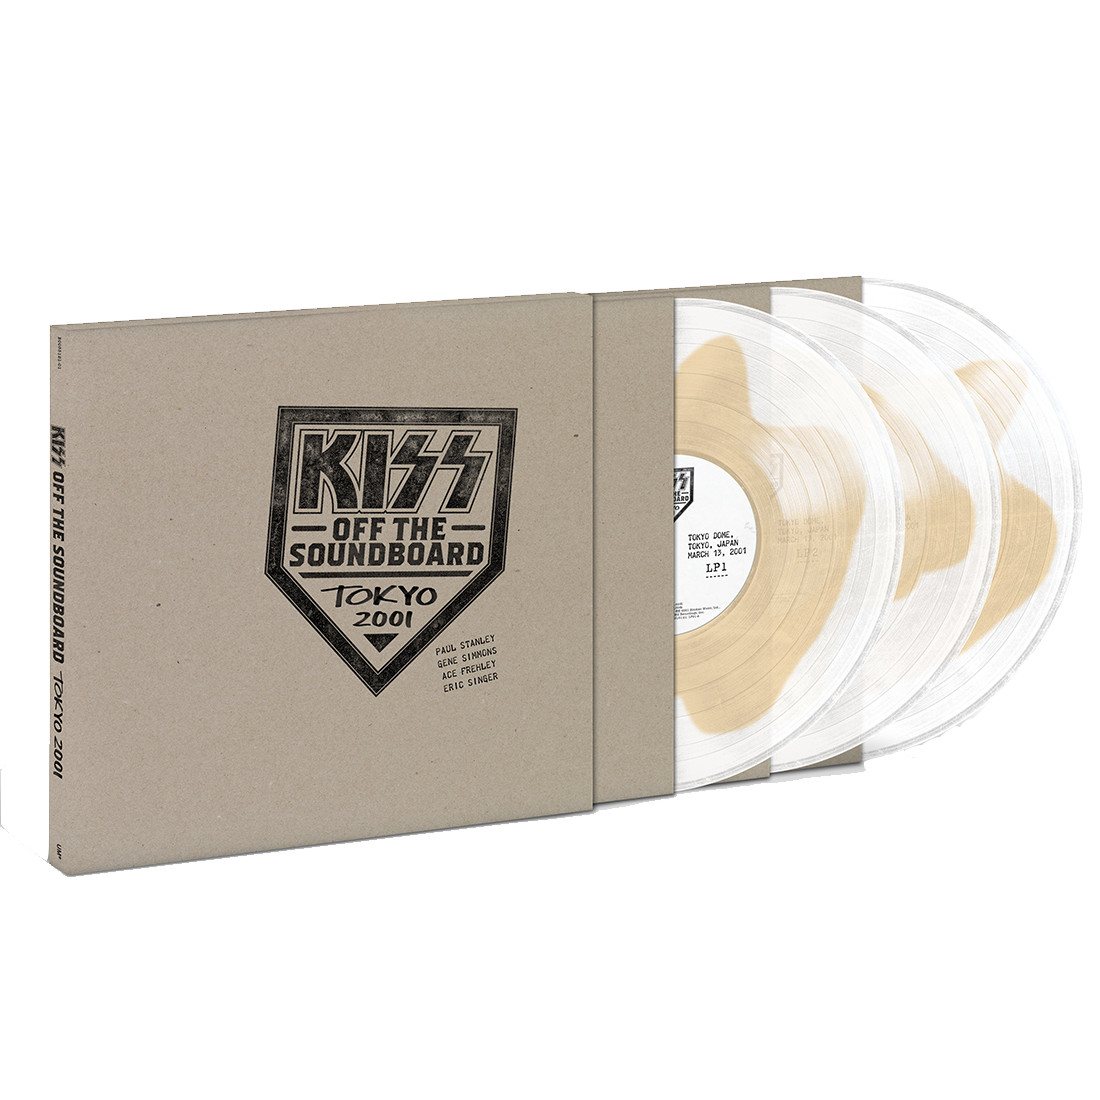 Kiss - Off The Soundboard - Tokyo Dome (Tokyo, Japan 3/13/2001):  Exclusive Coloured Vinyl 3LP